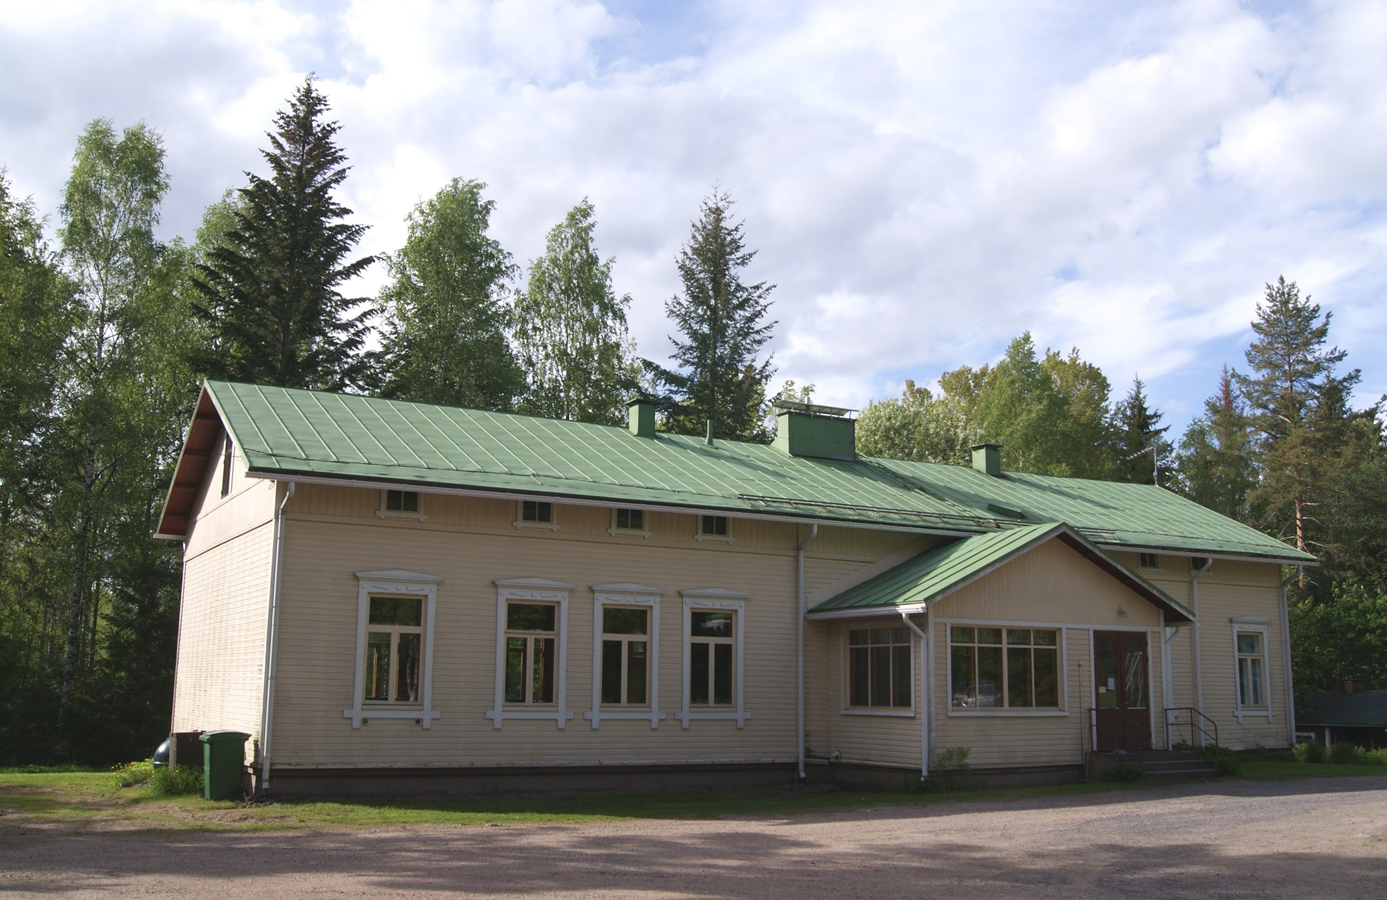 May 31, 2015. Former base of Vehniäinen long-range reconnaissance patrol